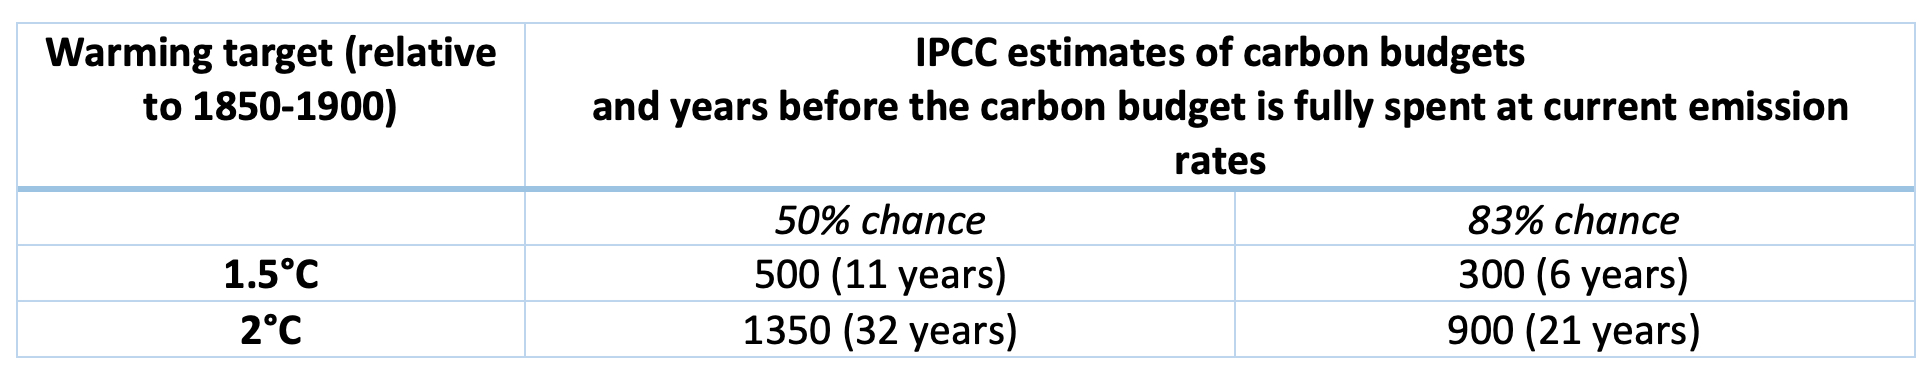 IPCC estimates of the remaining carbon budget